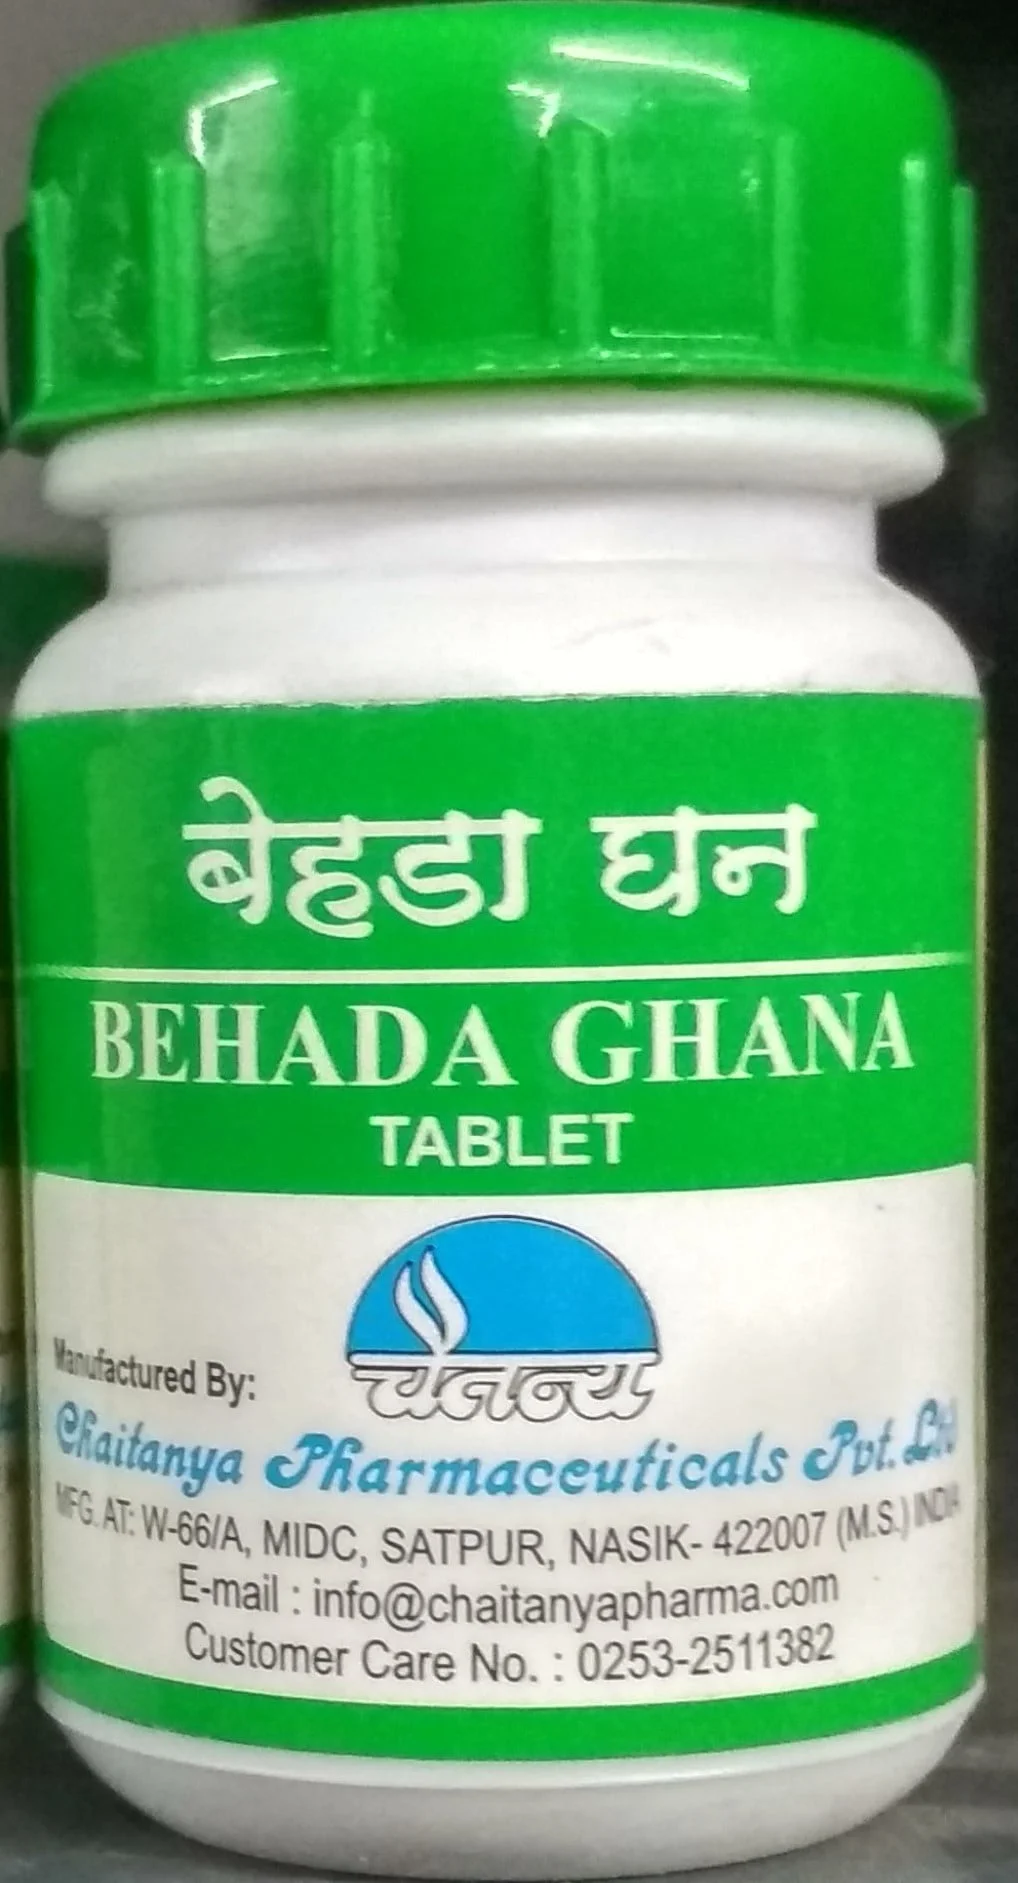 behada ghana 500tab upto 20% off chaitanya pharmaceuticals